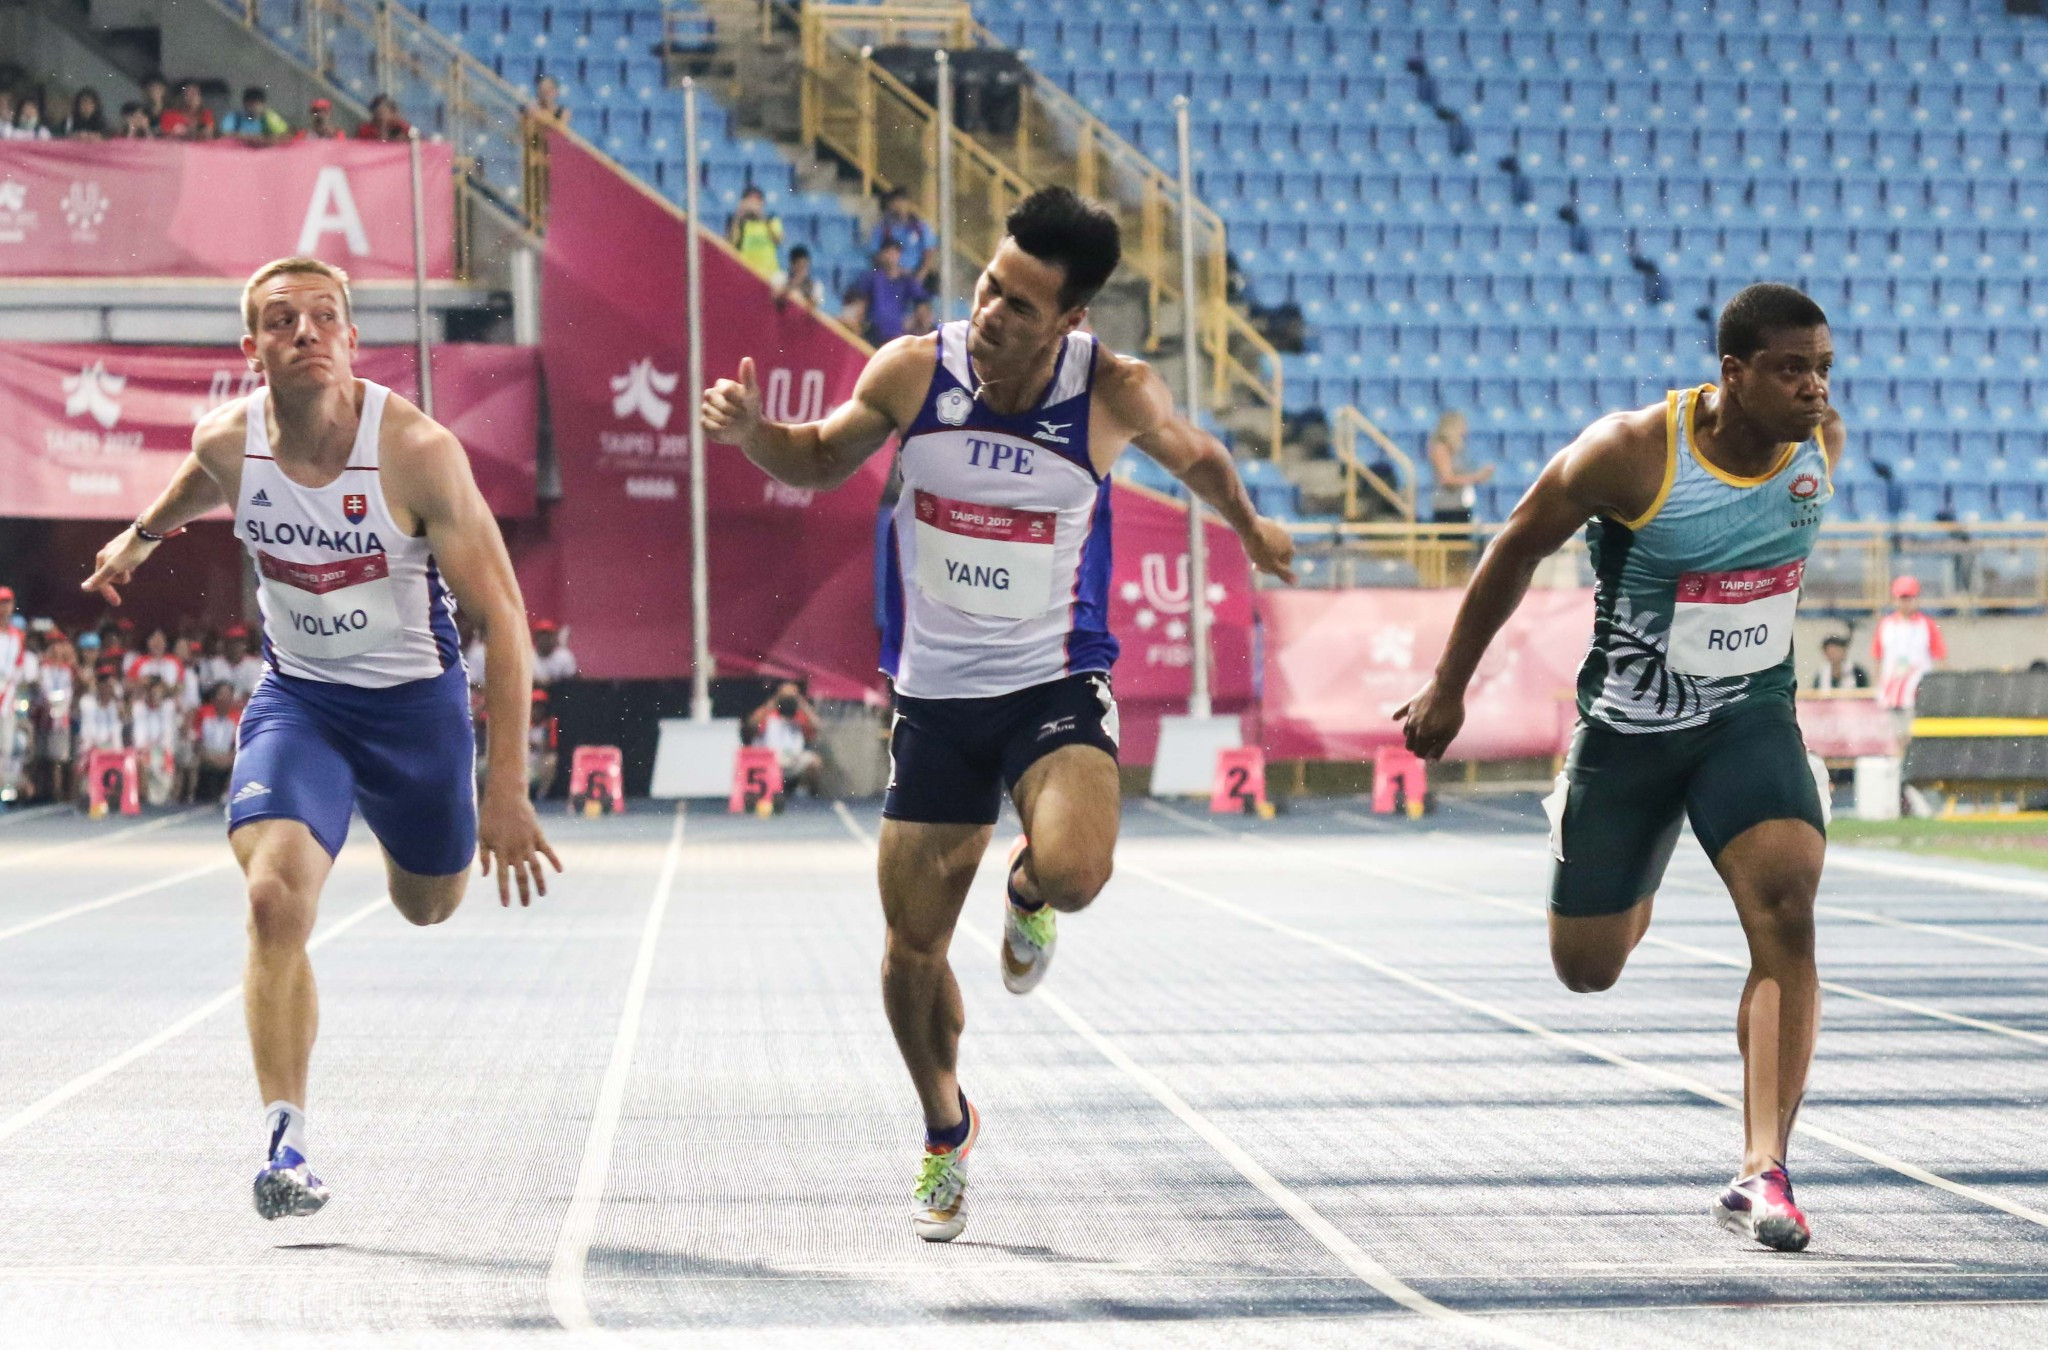 Yang thrills home crowd by winning men's 100m final at Taipei 2017